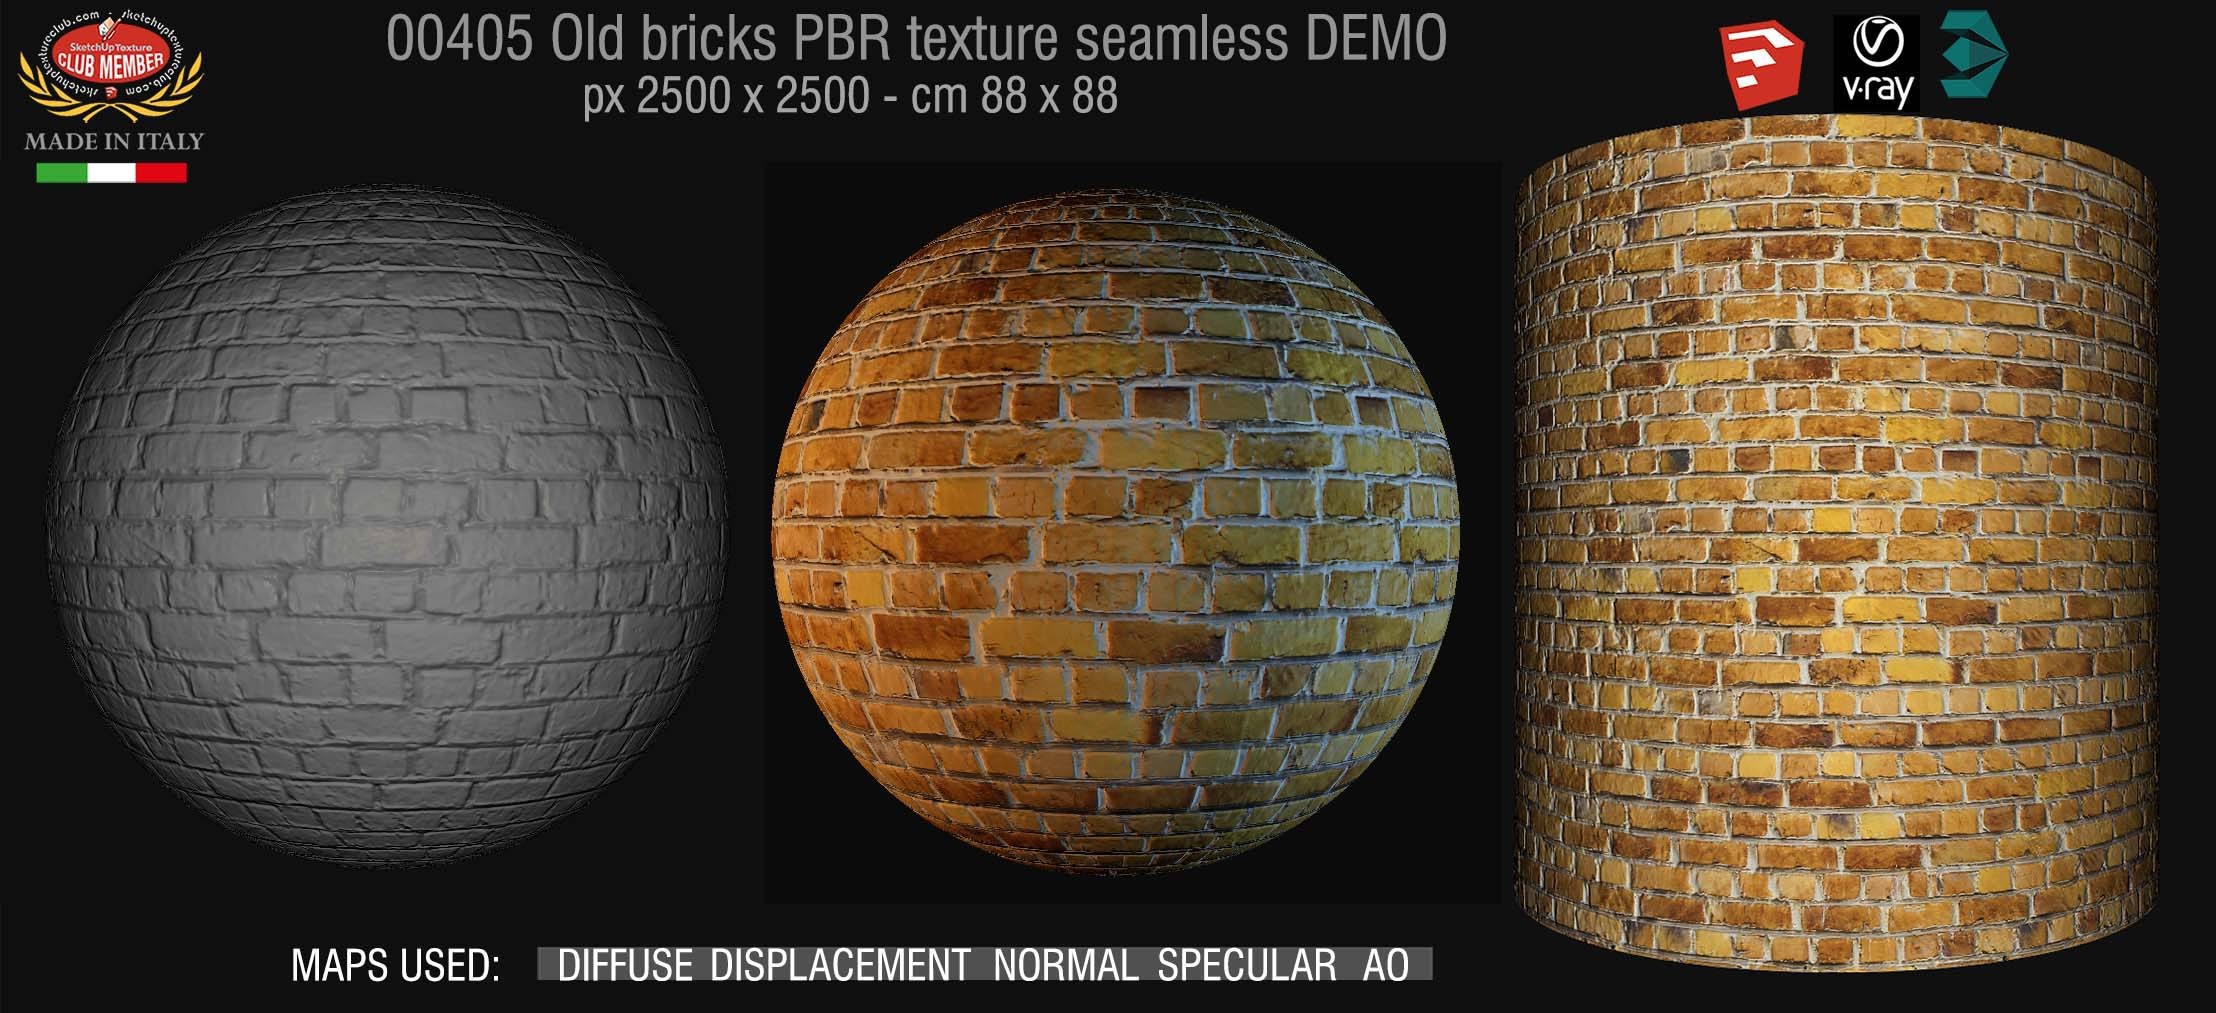 00405 Old bricks PBR texture seamless DEMO